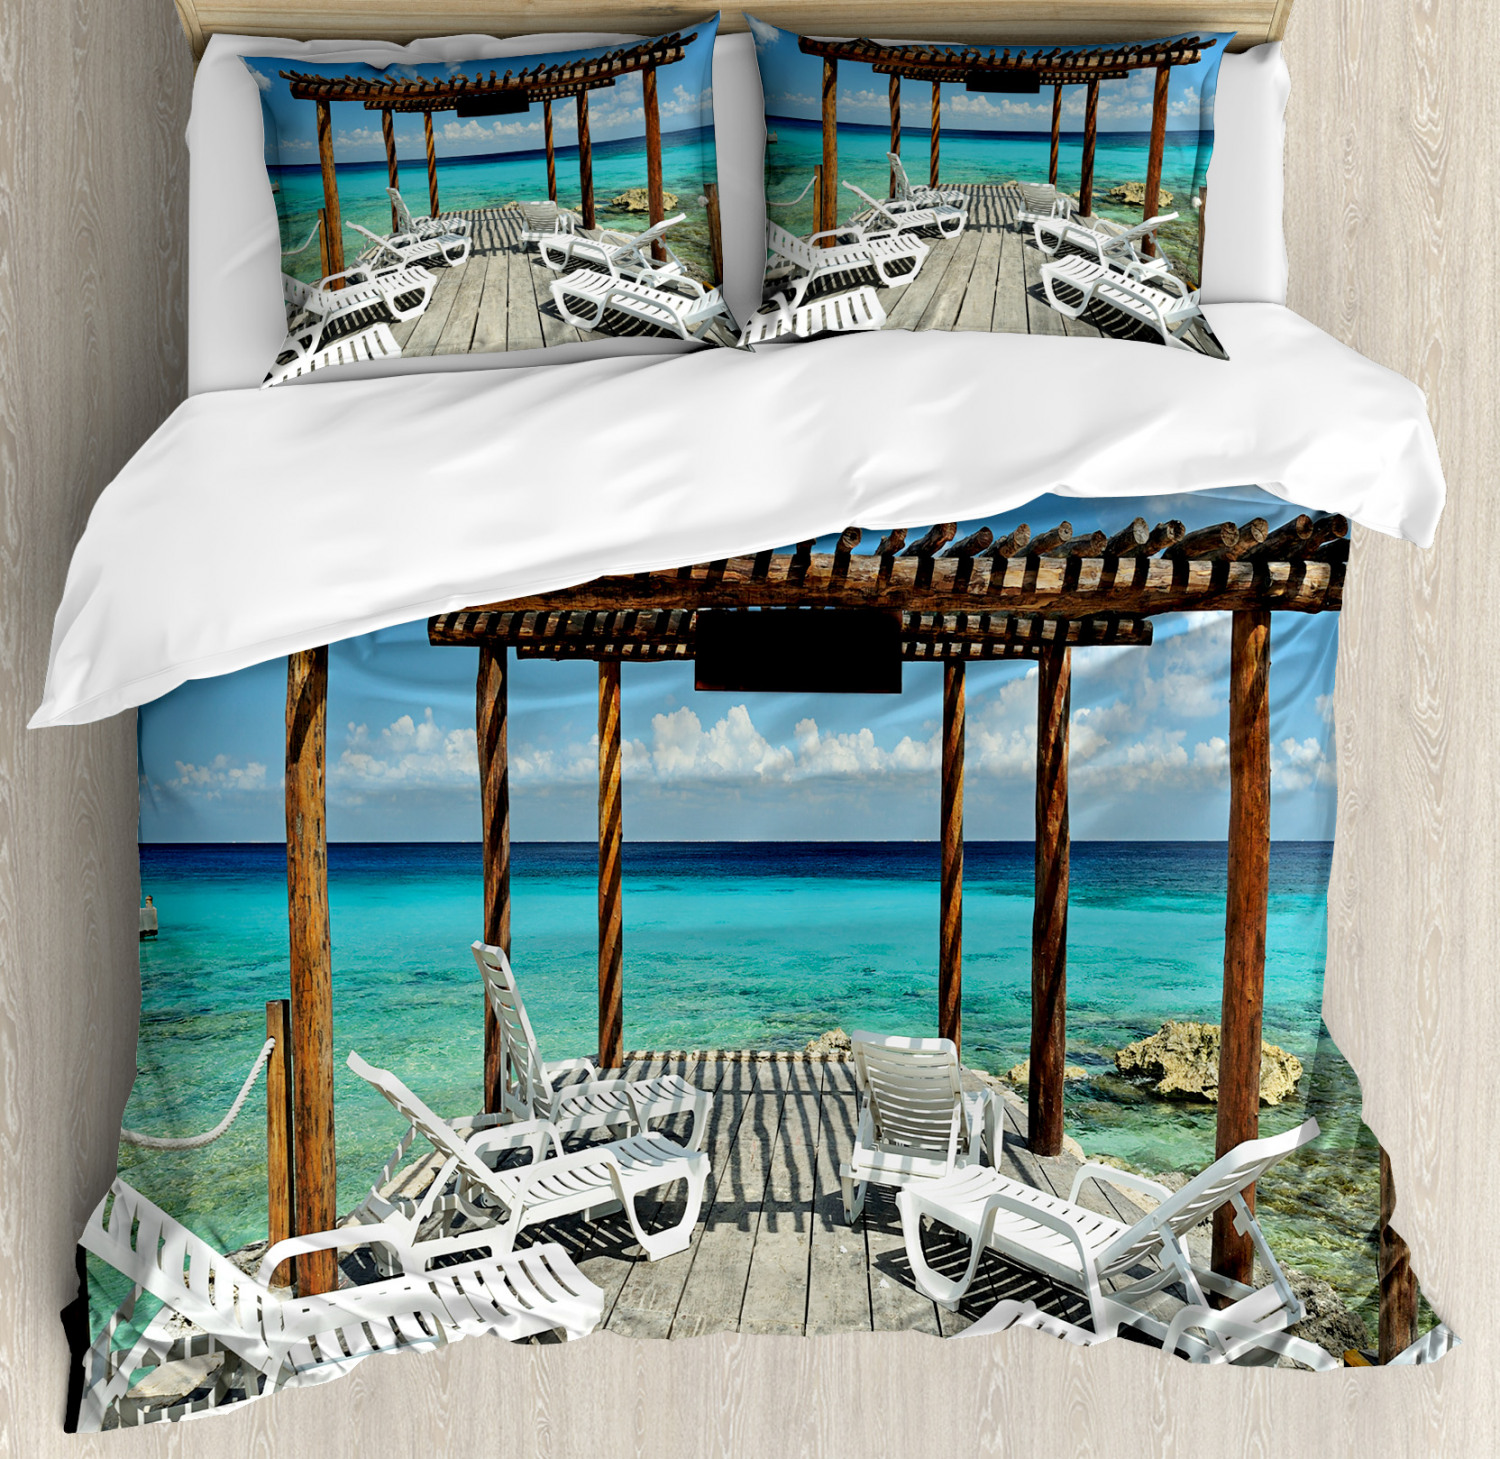 Summer Duvet Cover Set with Pillow Shams Sunbeds SeaSunbeds Print | eBay